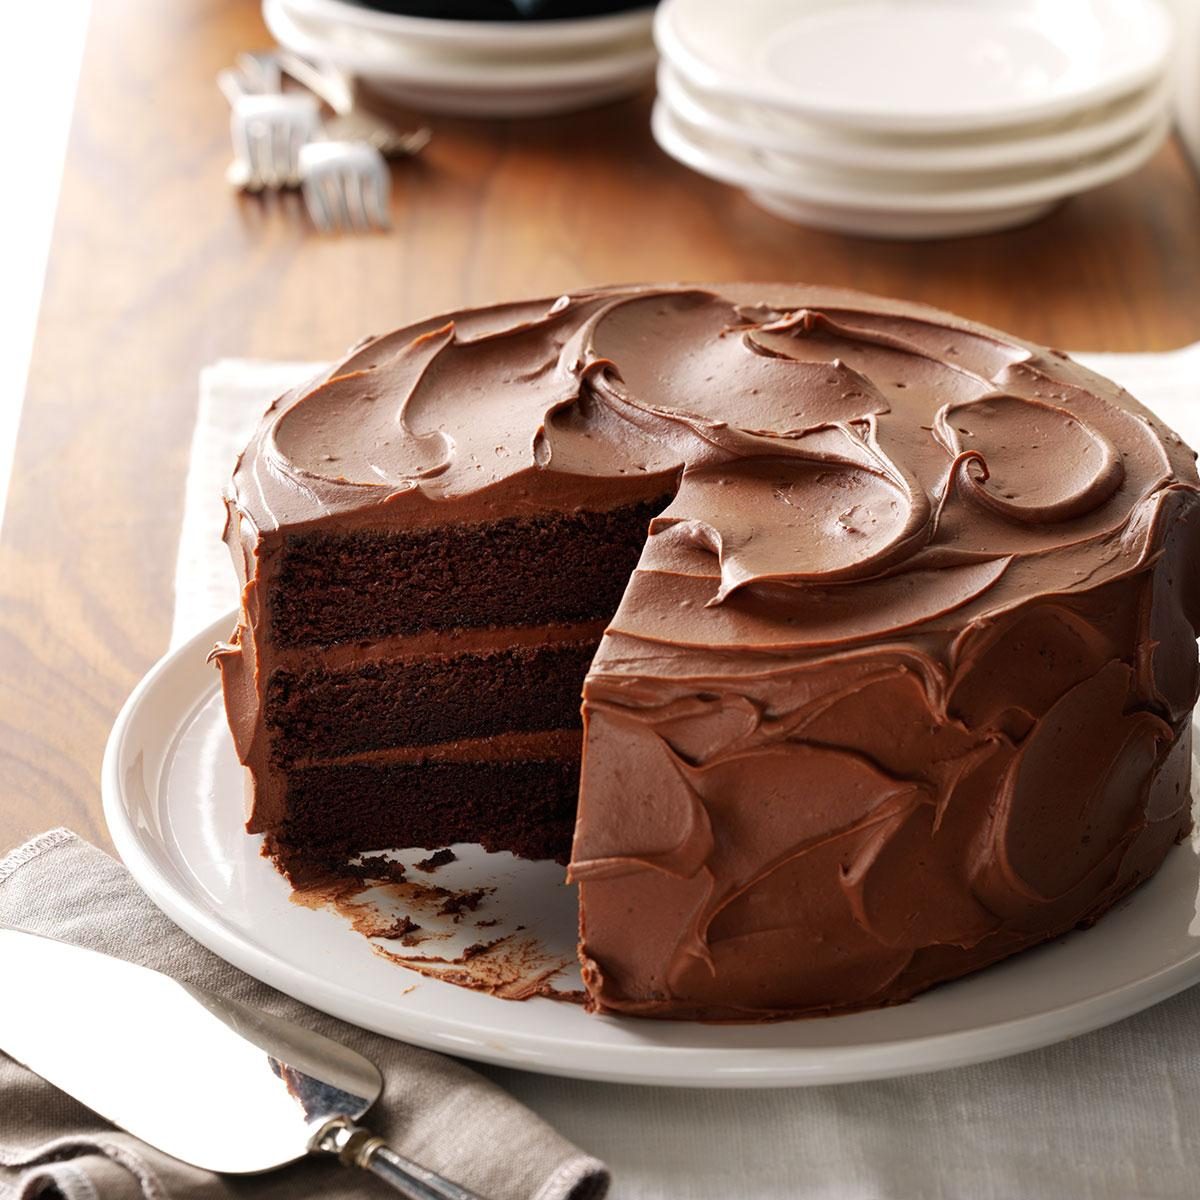 Sandy s Chocolate Cake Recipe How to Make It